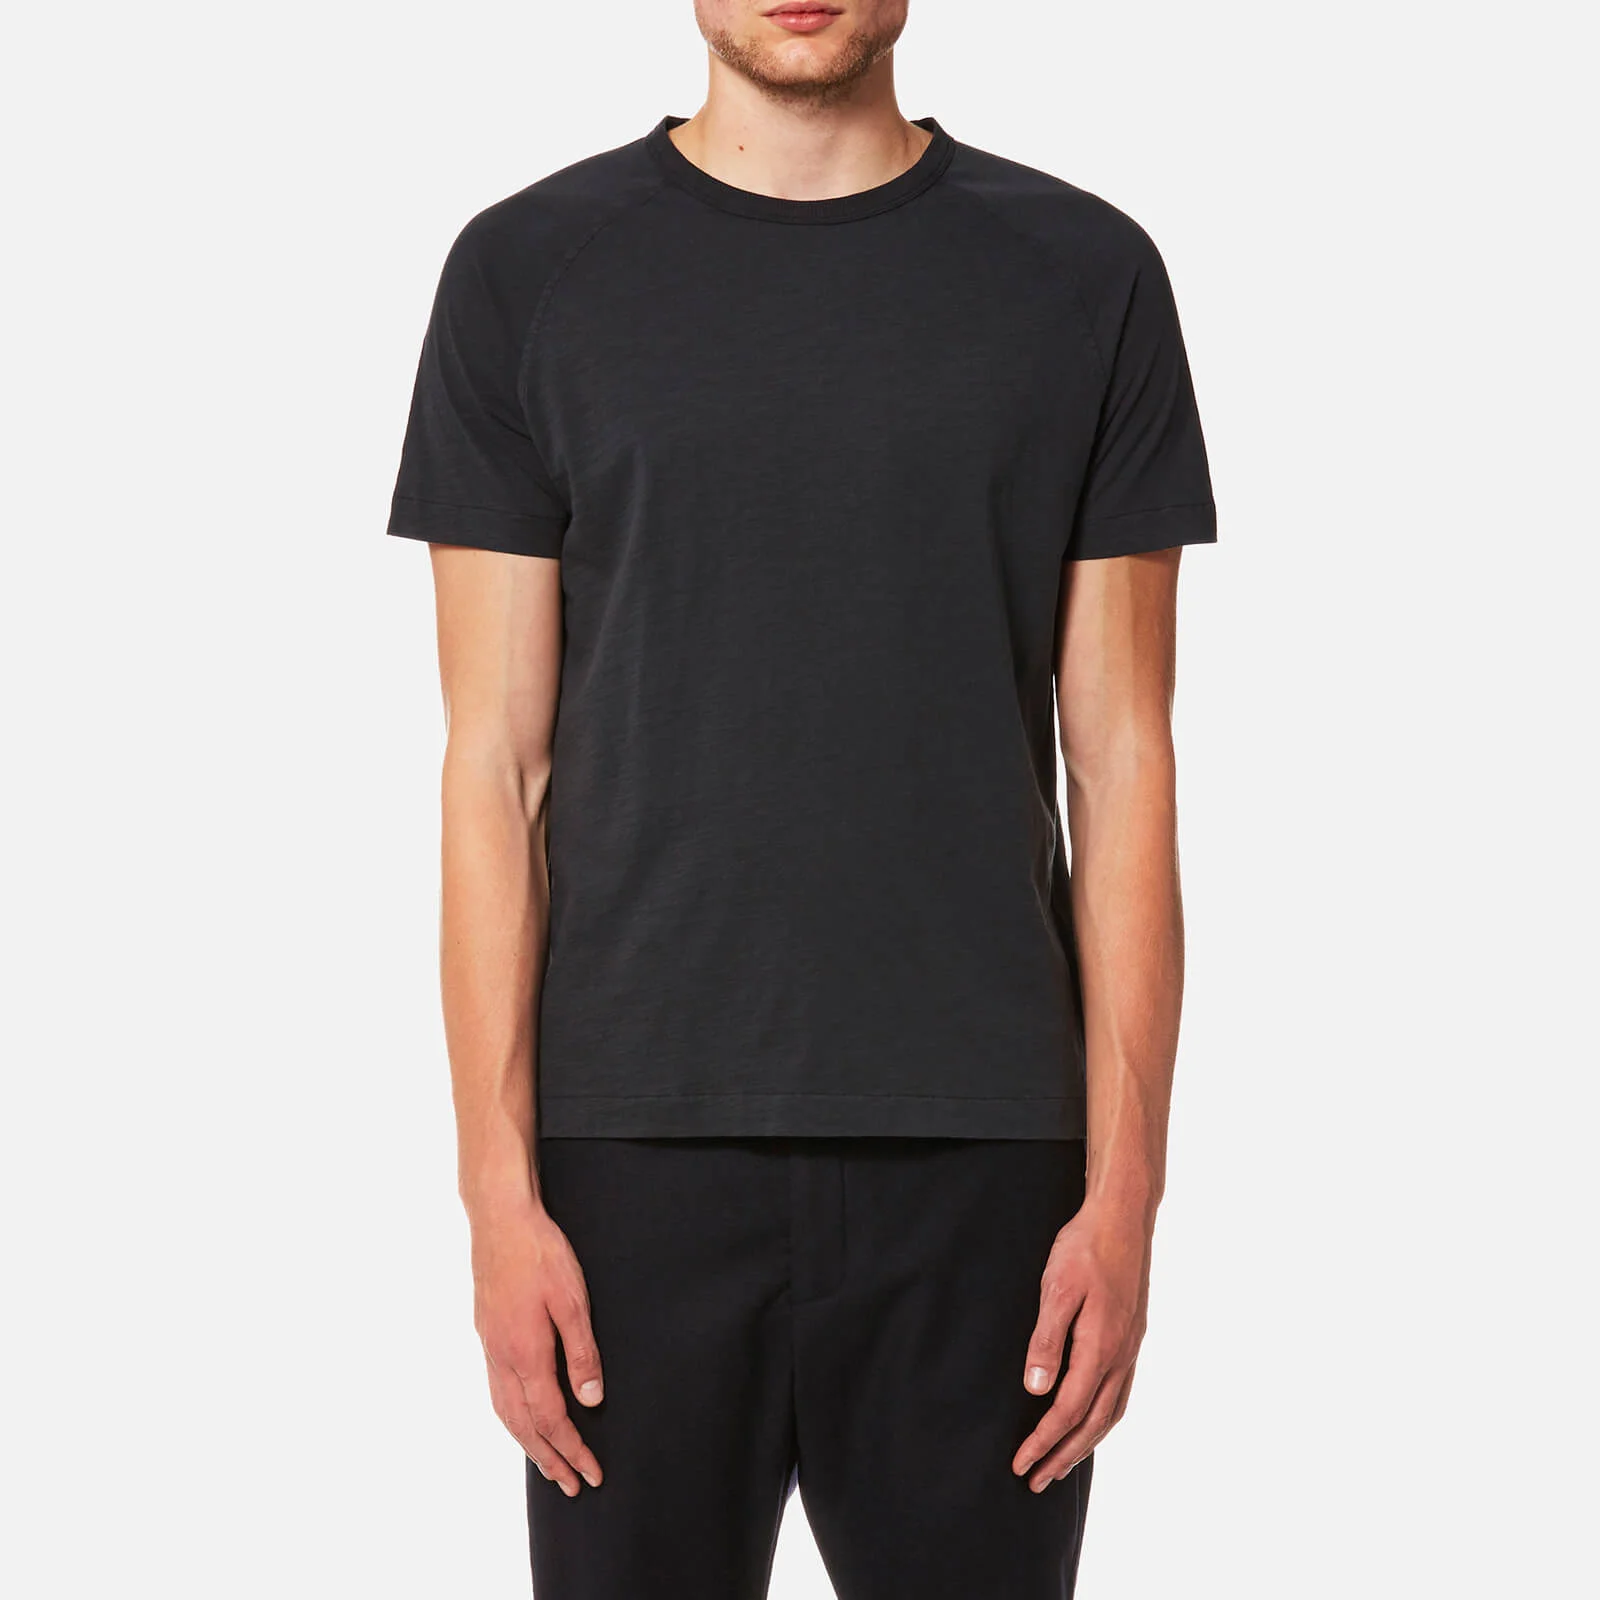 YMC Men's Television Raglan T-Shirt - Black Image 1